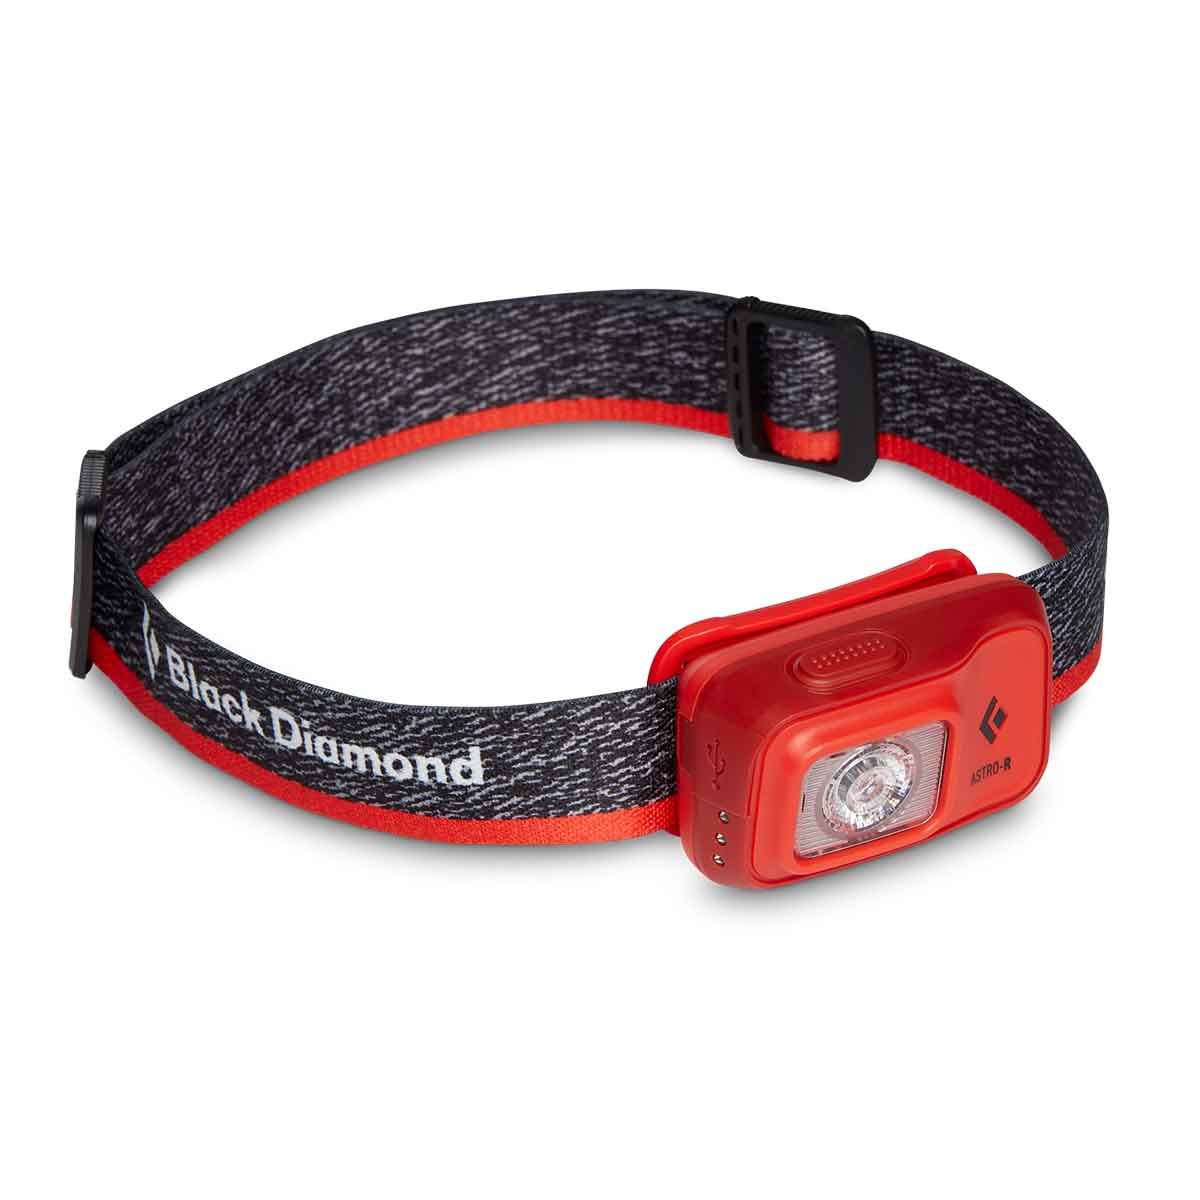 Black Diamond Astro 300-R otane